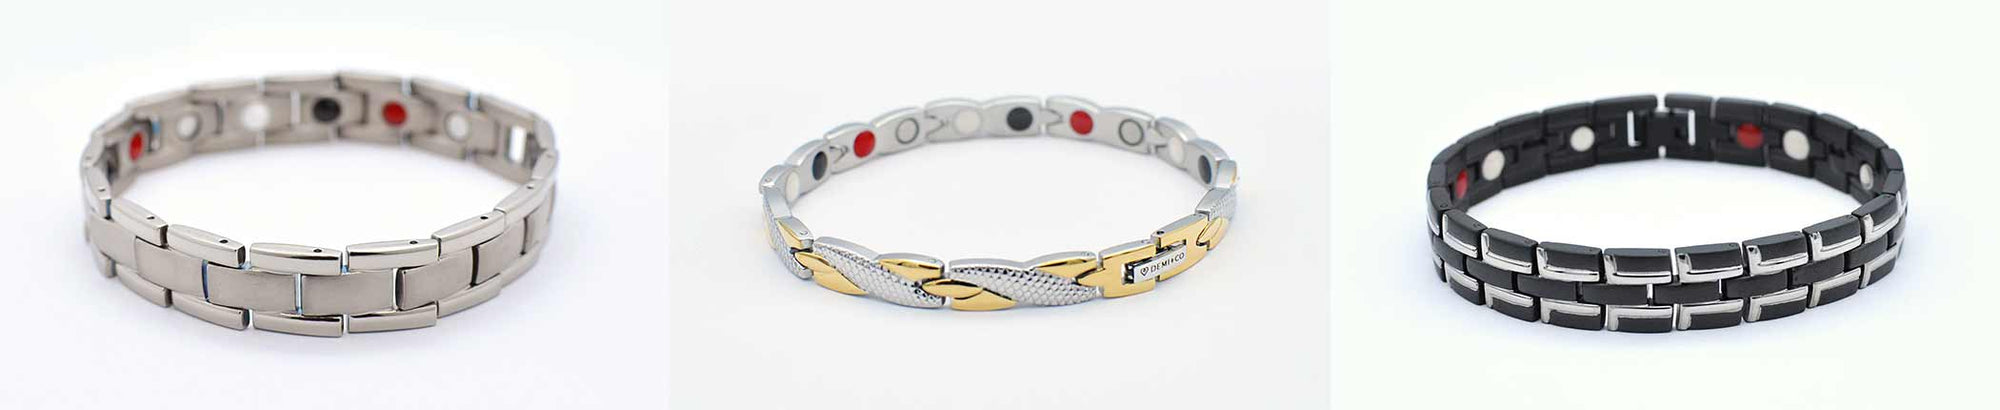 Titanium magnetic bracelets pros and cons